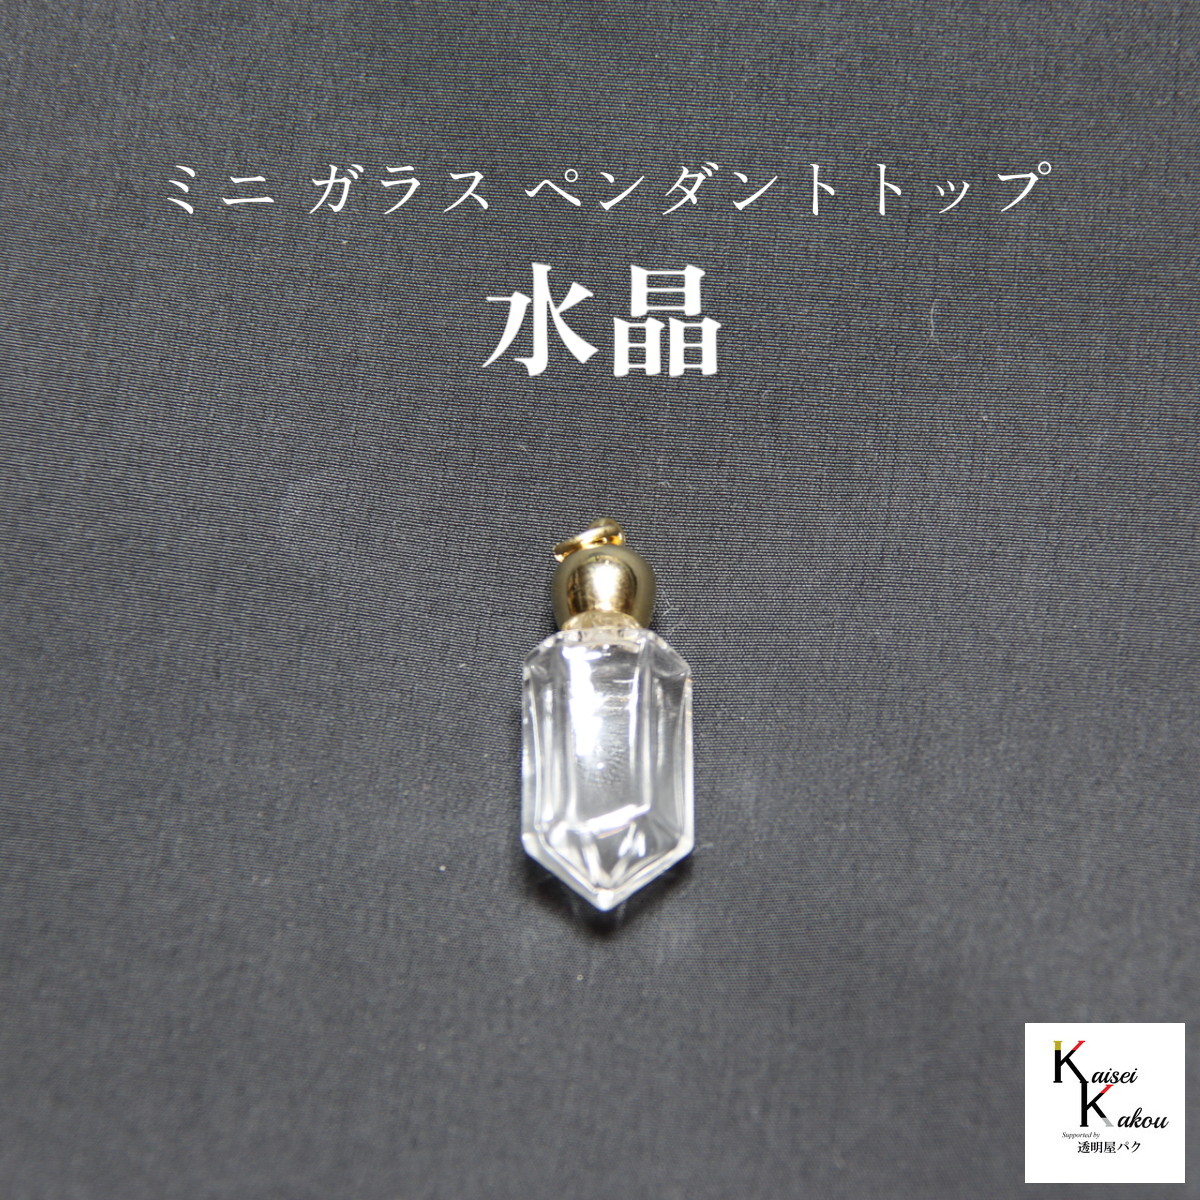  perfume bin bottle [ crystal ] Mini glass bottle atomizer small bin cap attaching memory oil ei shunt oil 